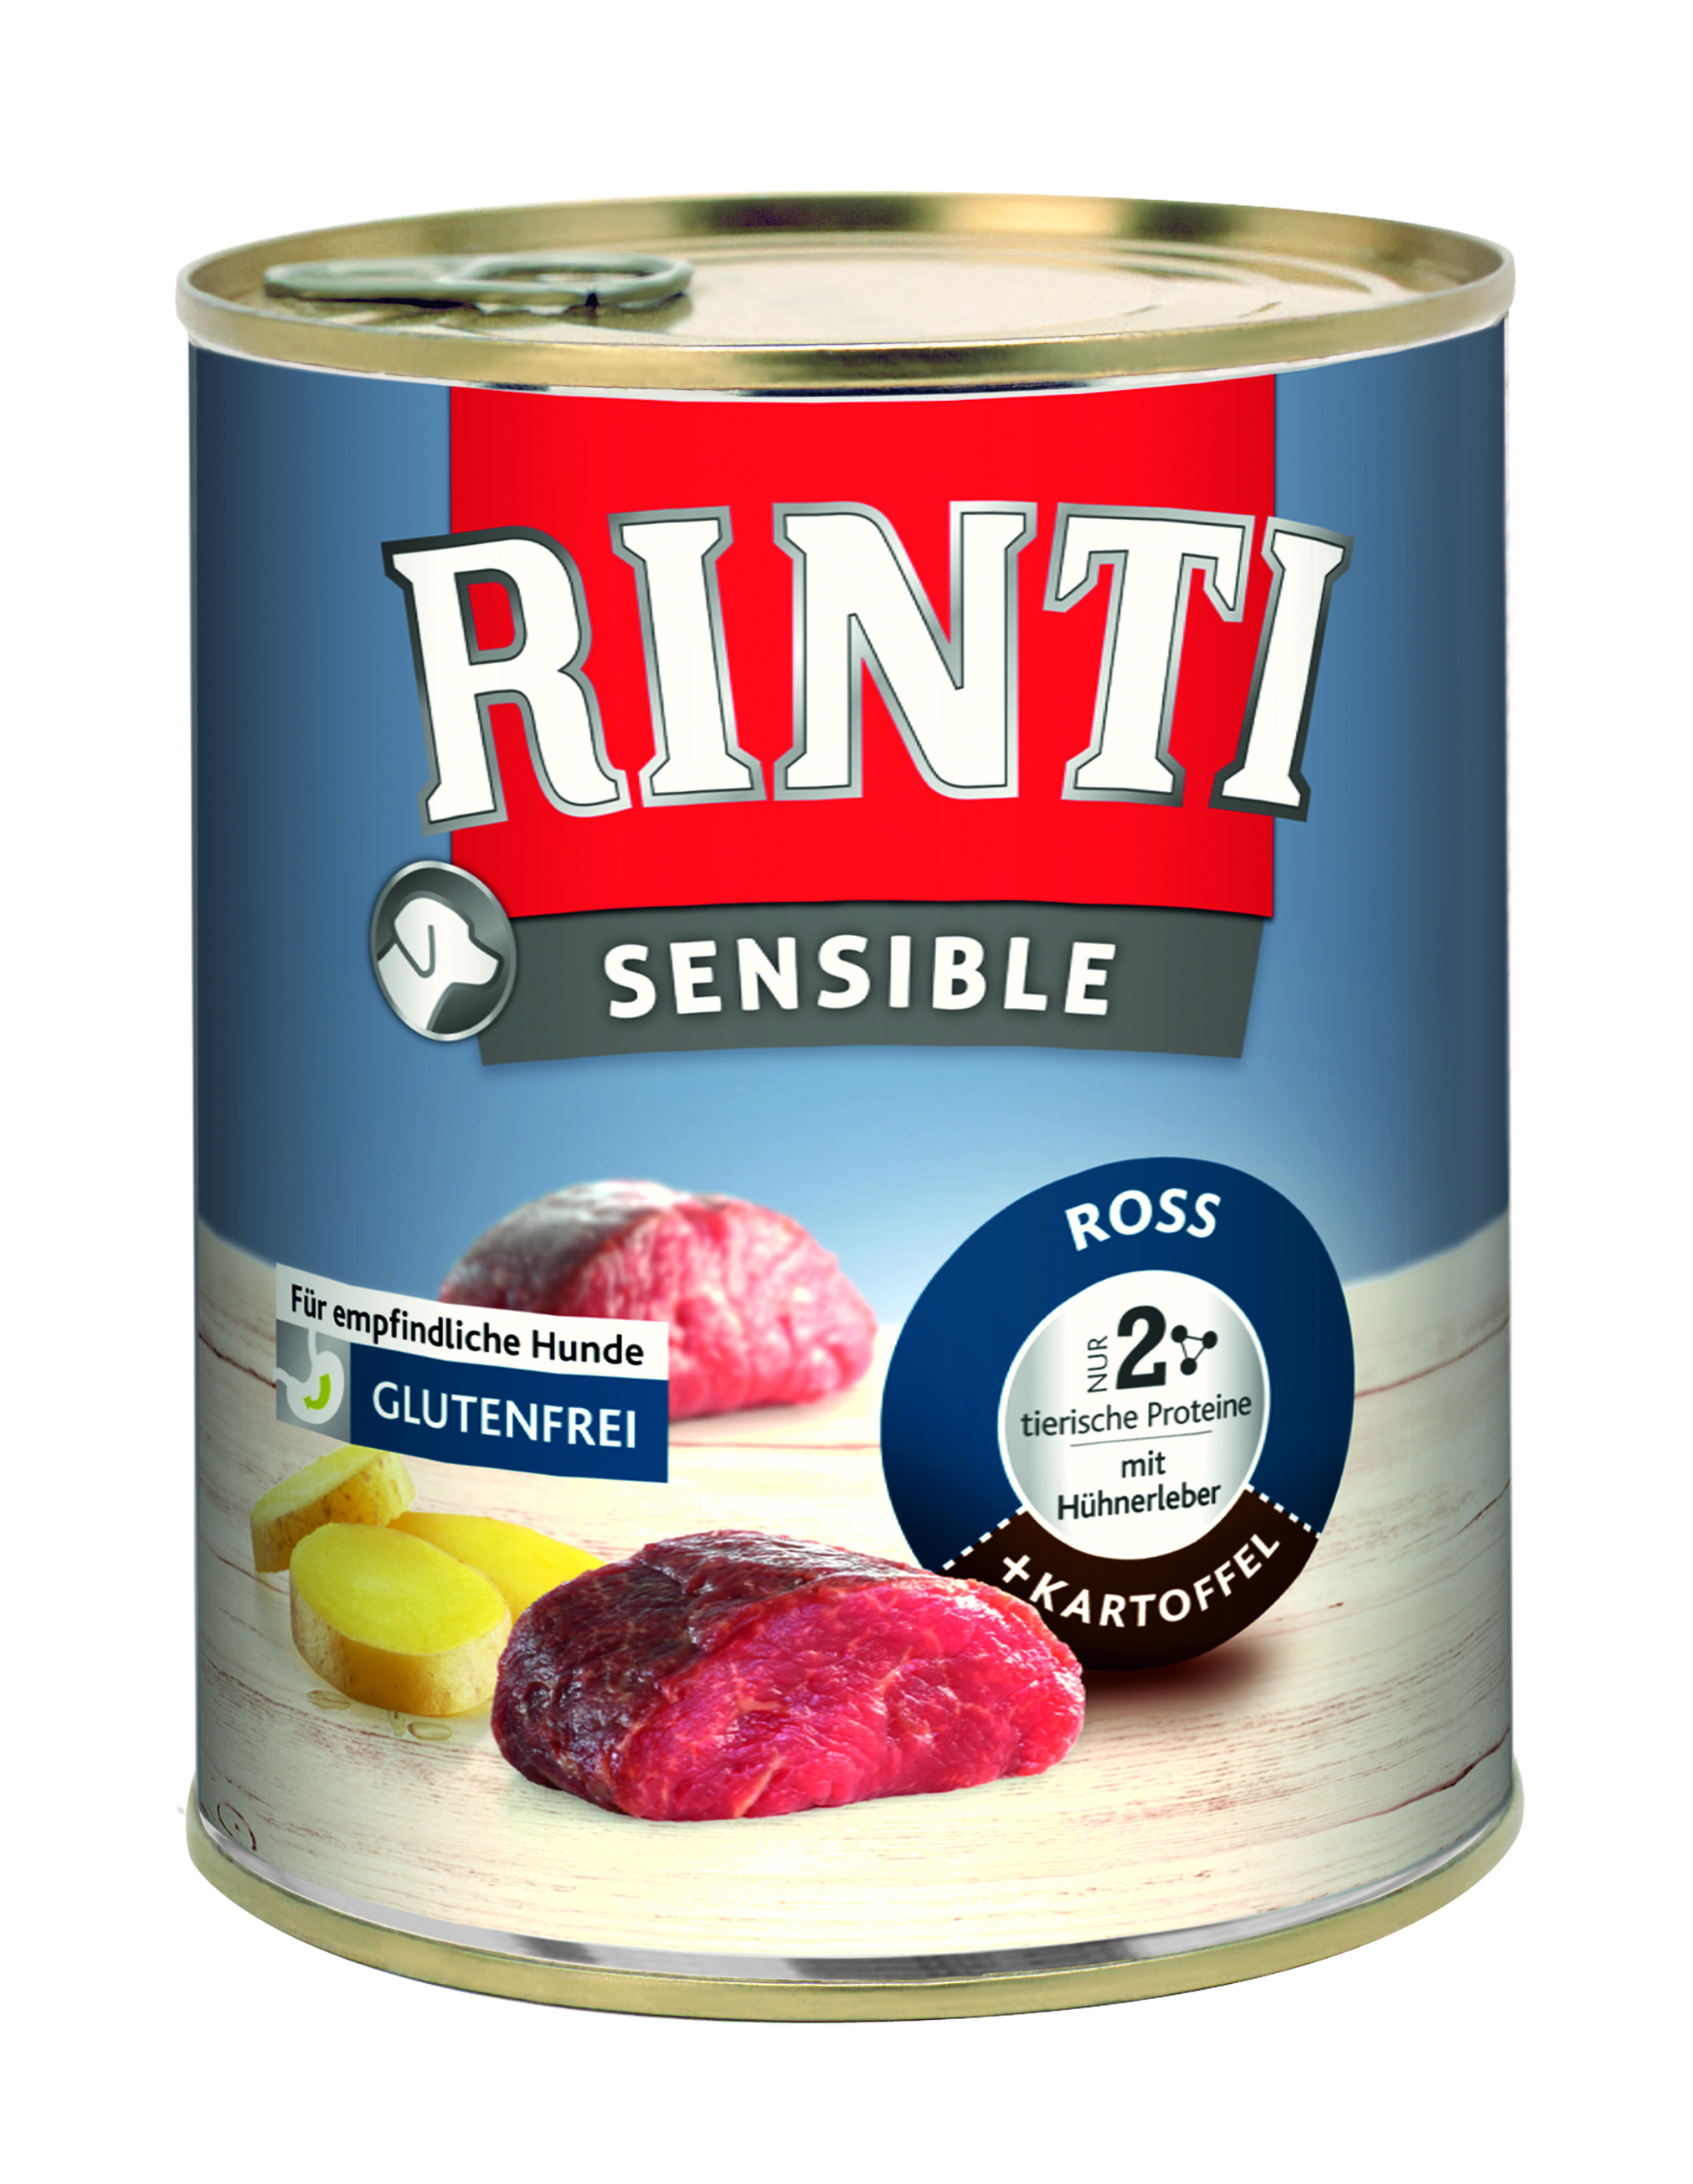 RINTI Sensible Ross, Hühnerleber & Kartoffel 800g